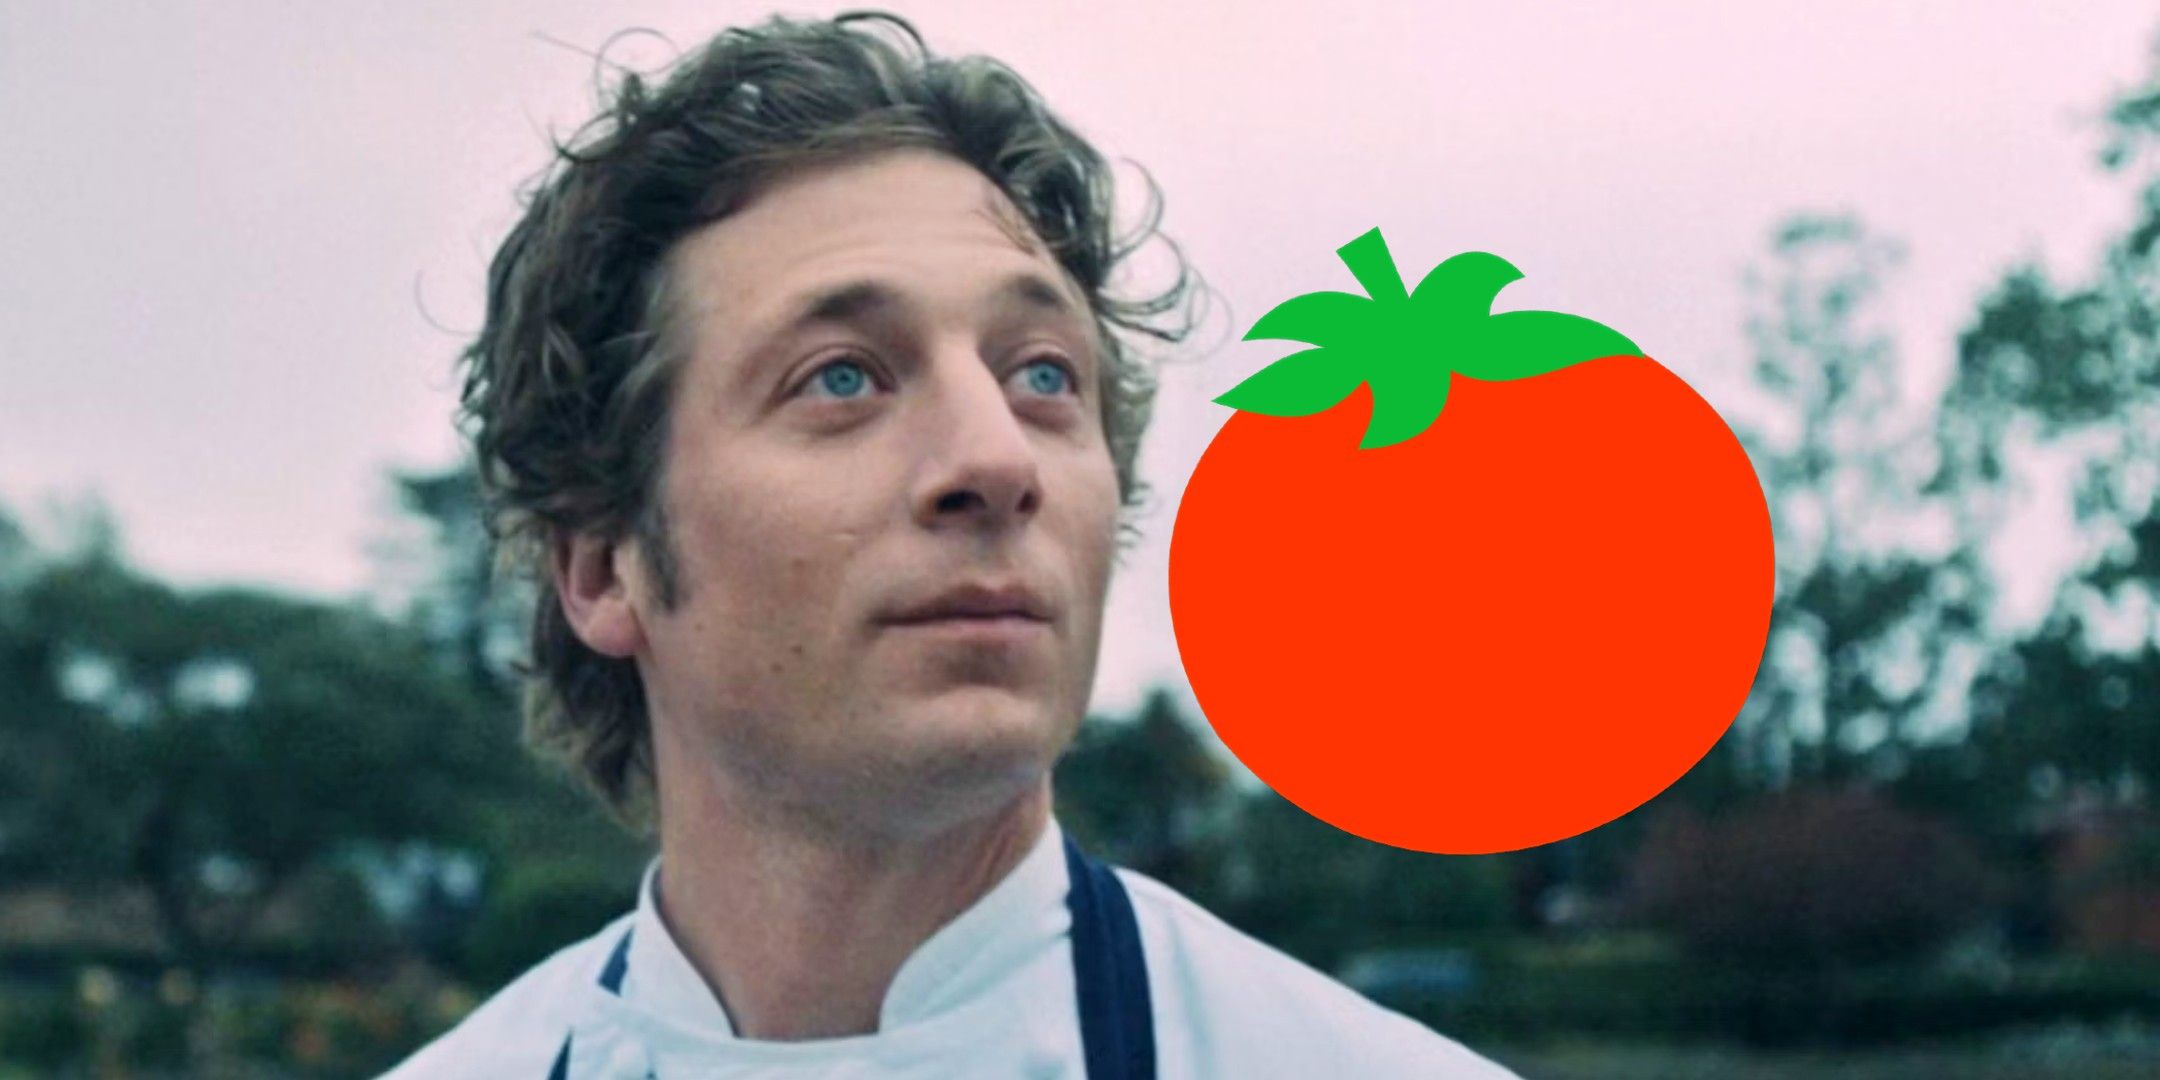 Carmy in The Bear season 3 next to a fresh ripe tomato